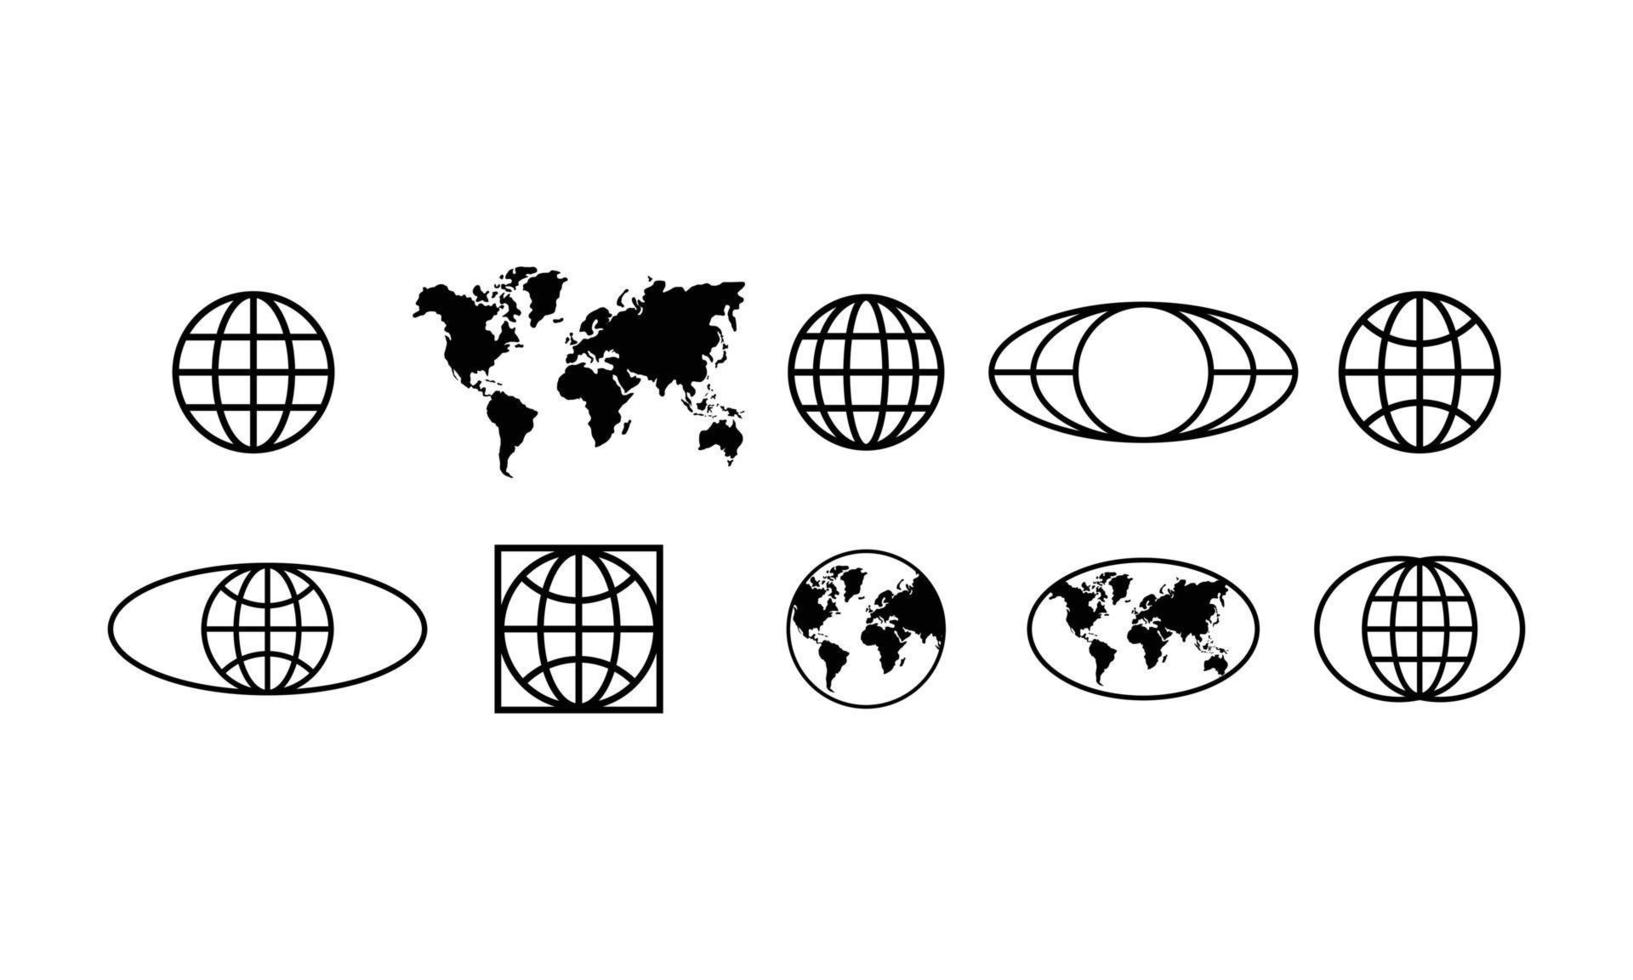 conjunto de coleta de simples terra, globo, mundo e mapa no estilo de contorno preto e branco. elementos de formas geométricas isolados no fundo branco em vetor de design de logotipo.